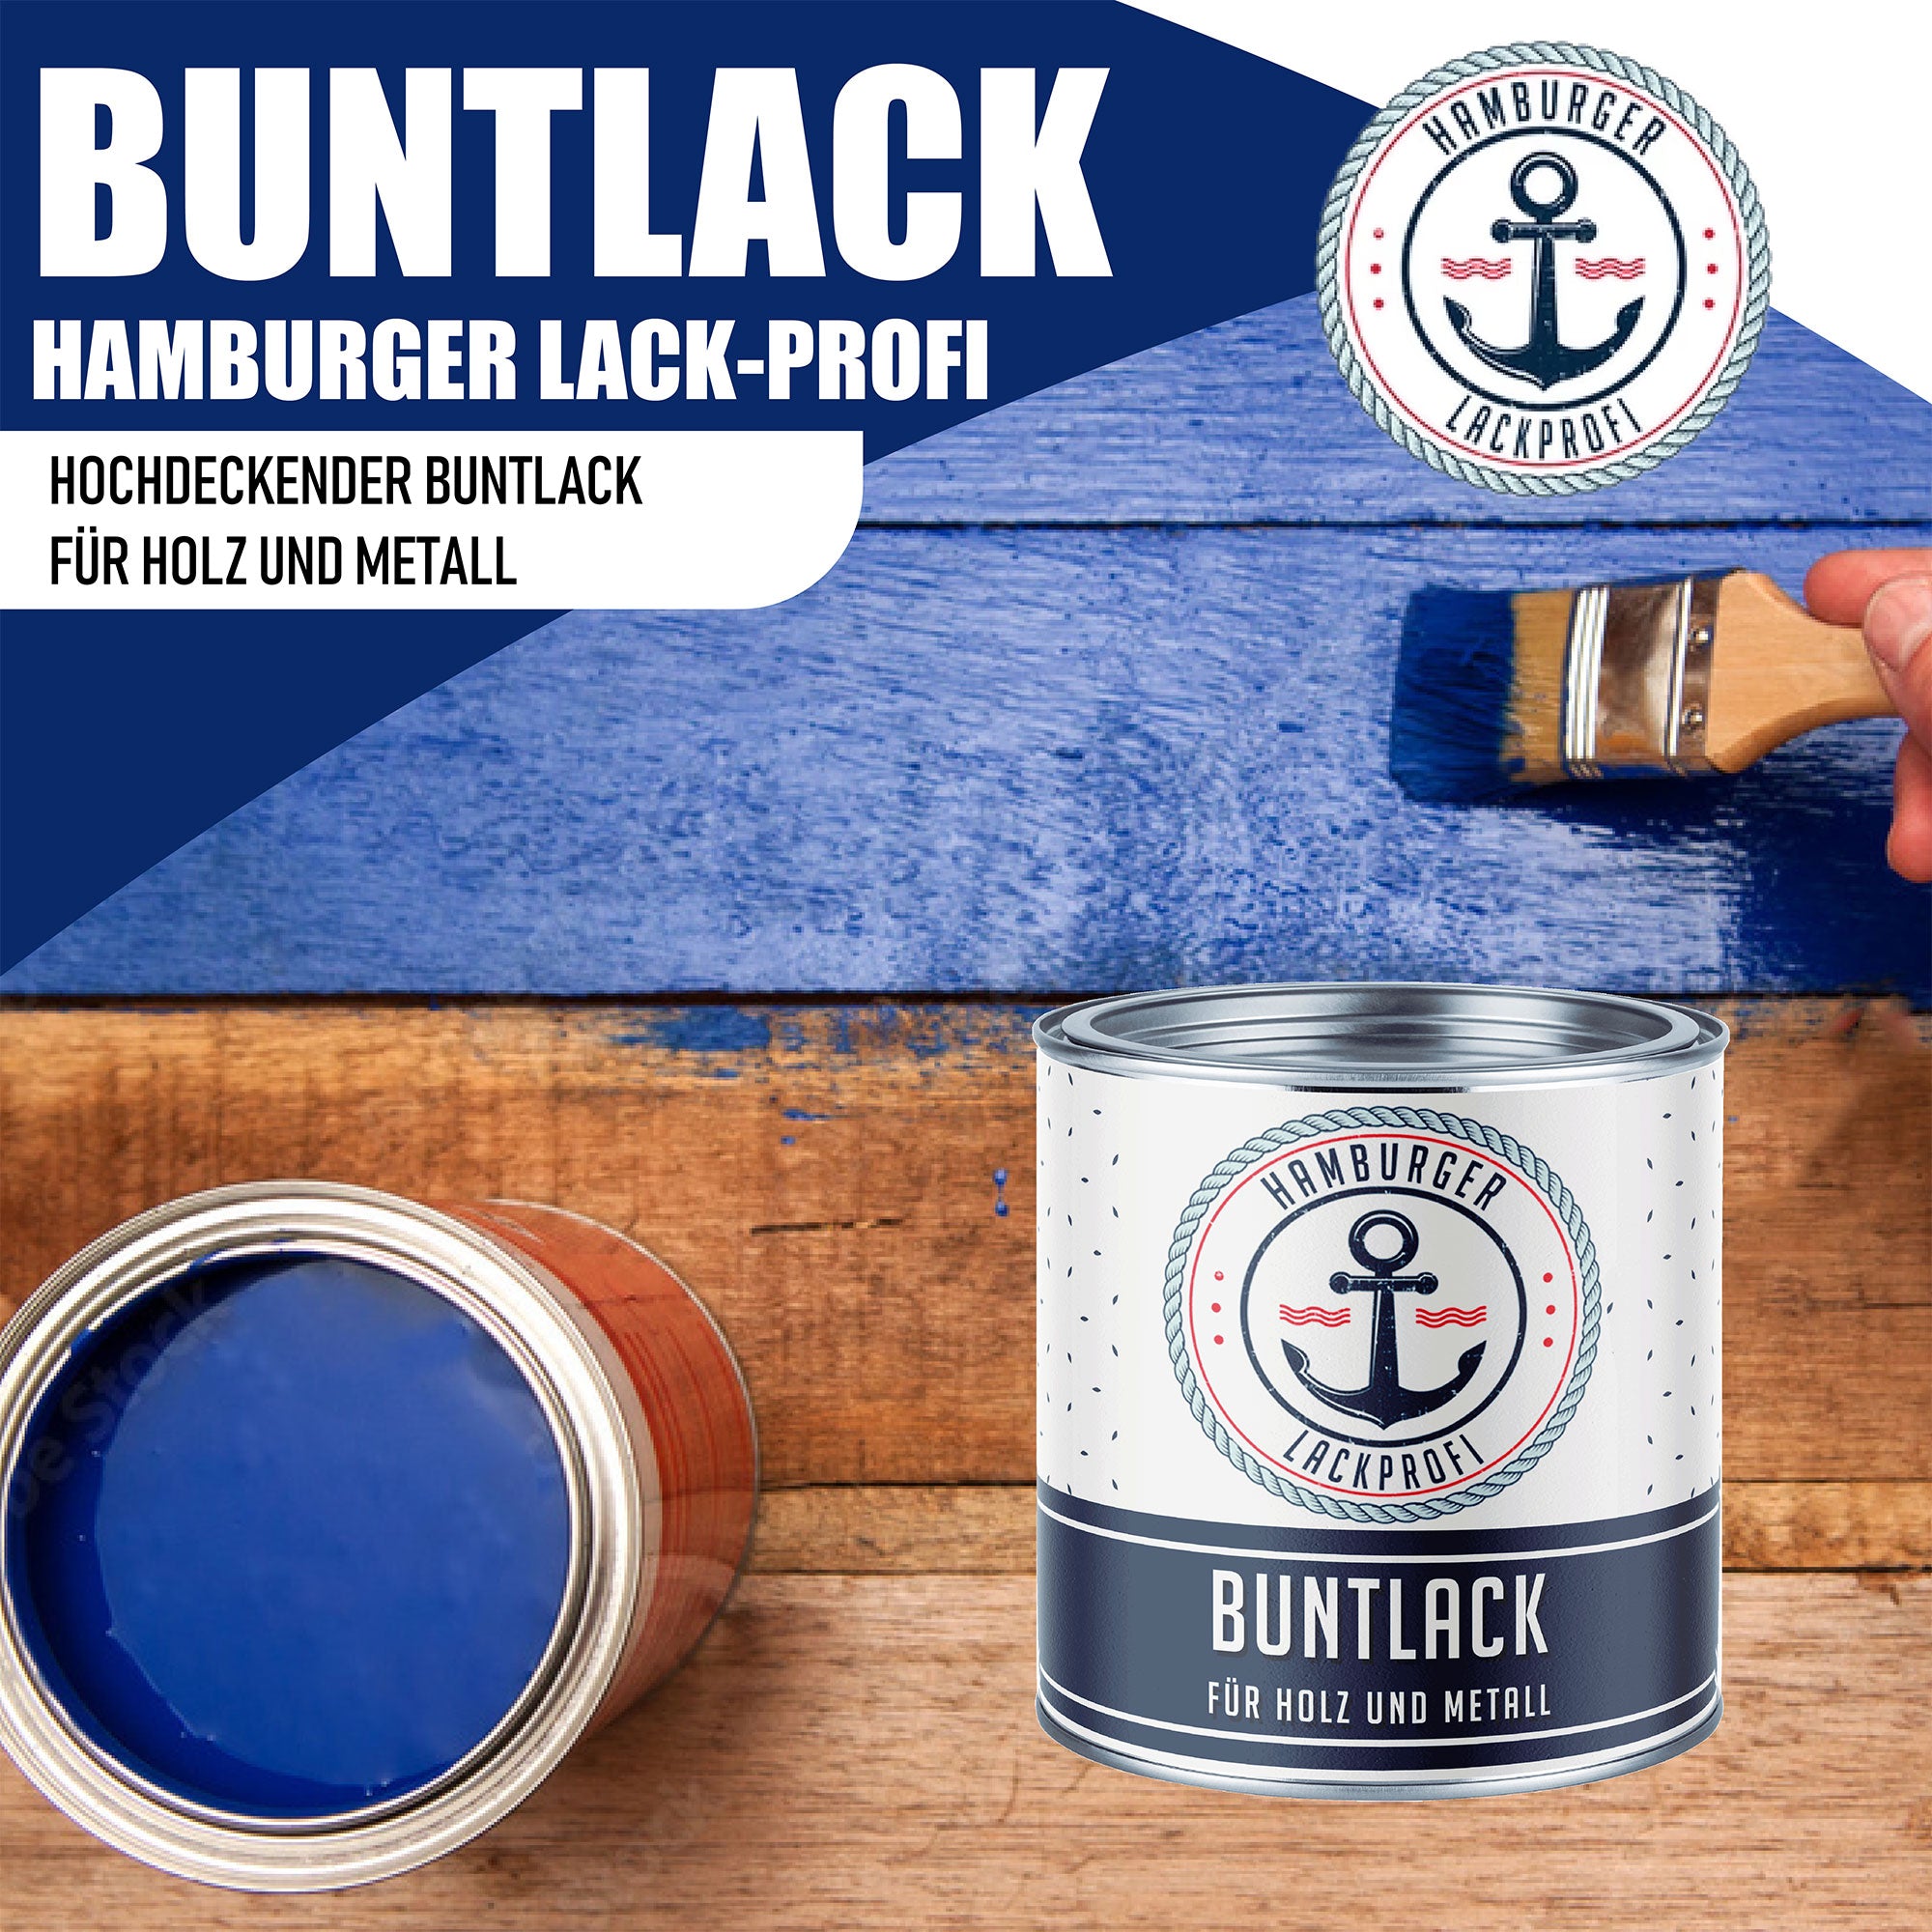 Hamburger Lack-Profi Buntlack in Anthrazitgrau RAL 7016 mit Lackierset (X300) & Verdünnung (1 L) - 30% Sparangebot